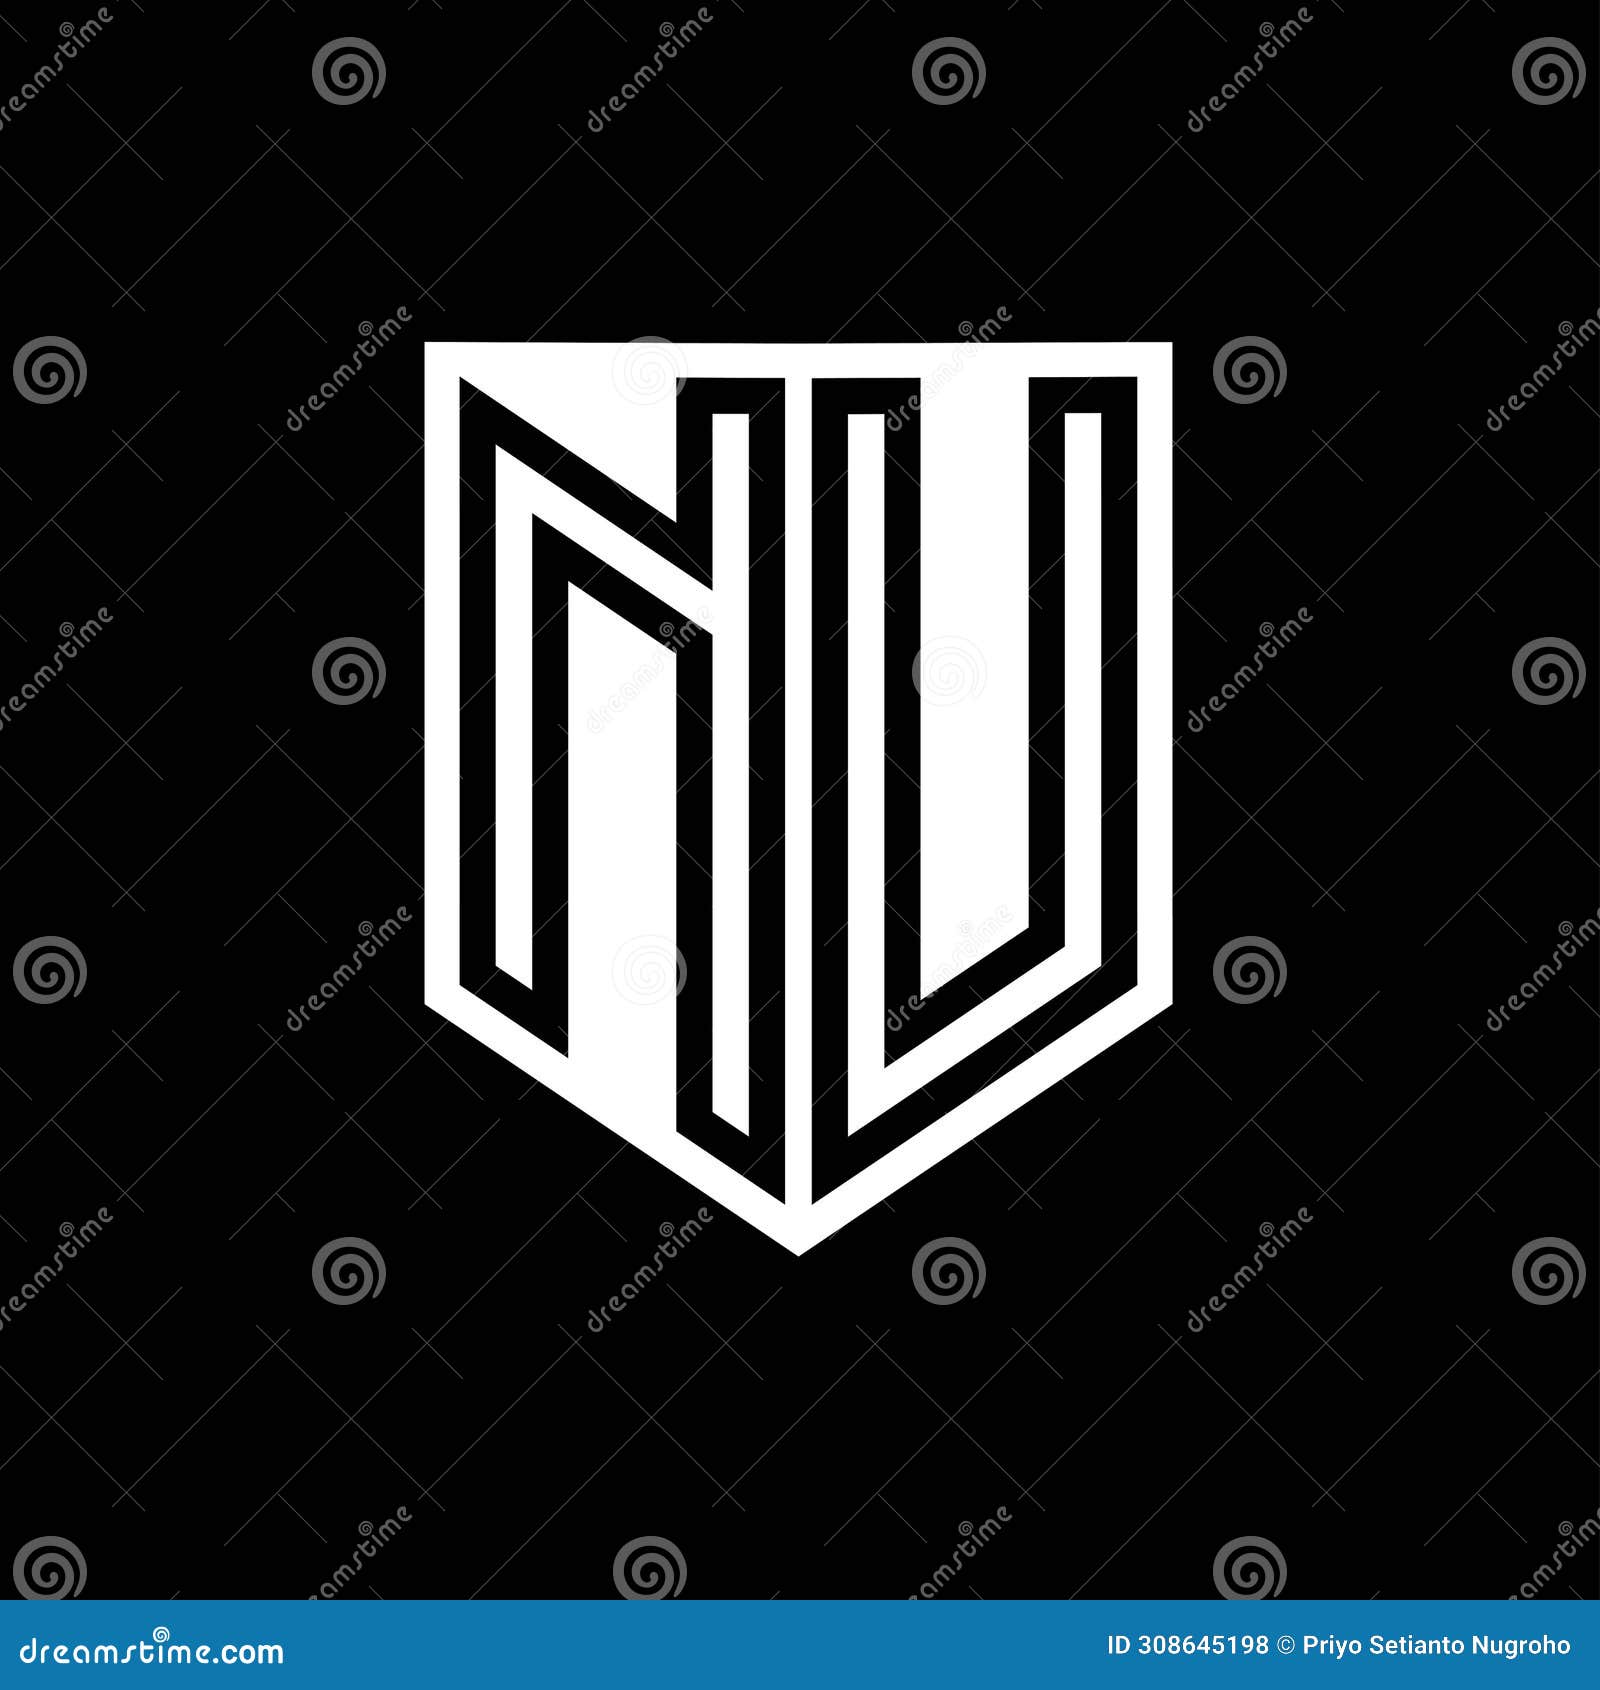 nu logo monogram shield geometric black line inside white shield color 